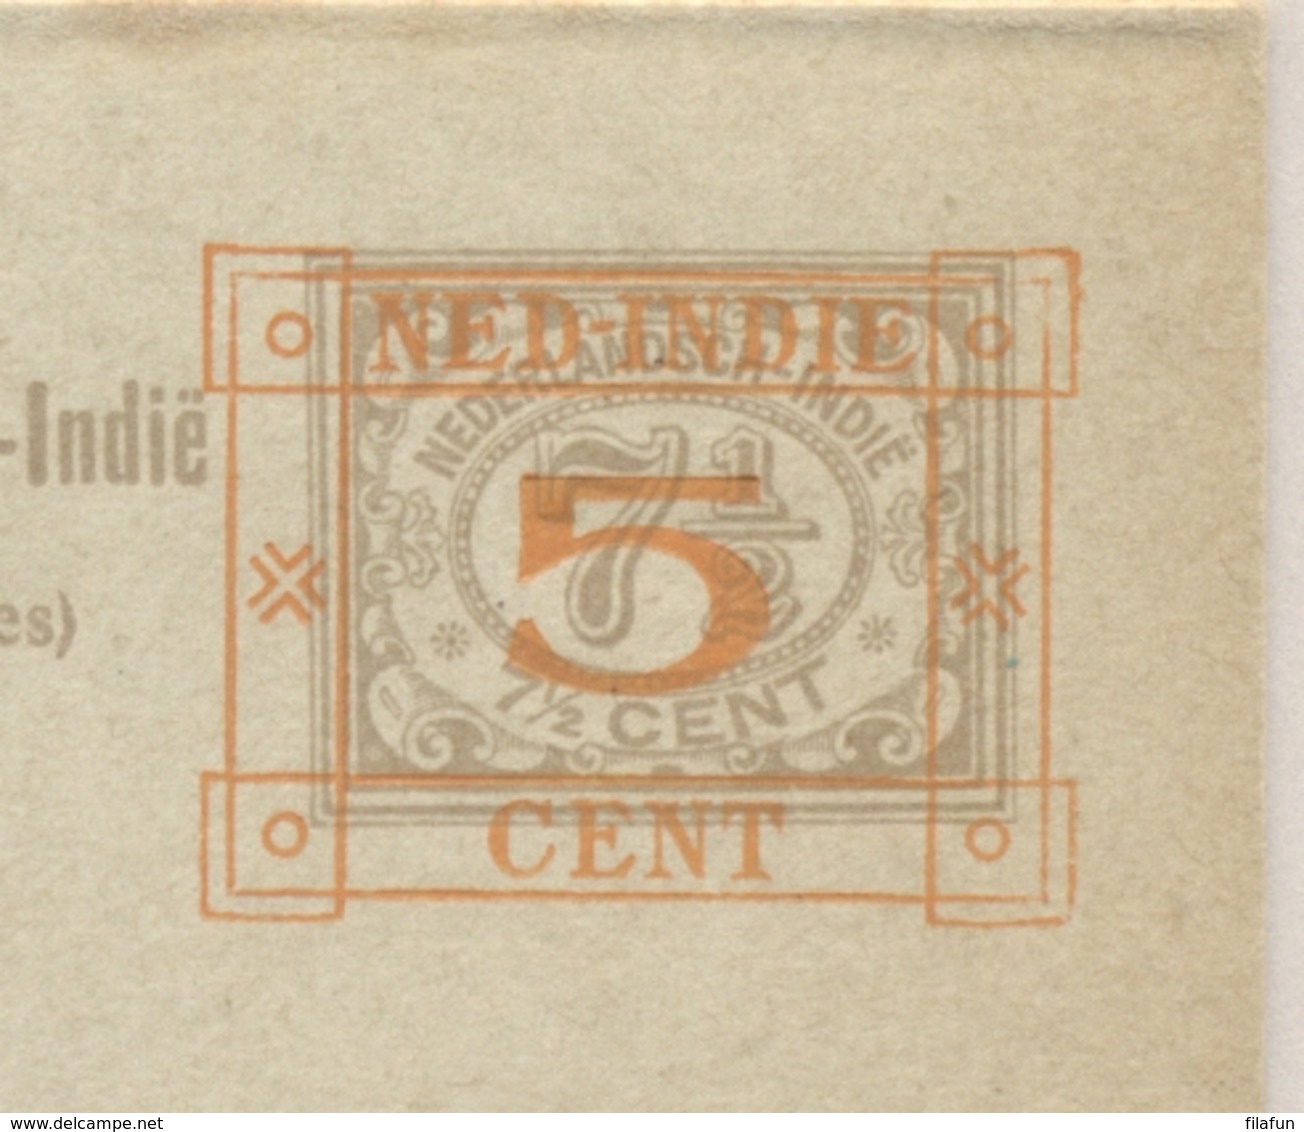 Nederlands Indië - 1929 - 5+5 Op 7,5+7,5 Cent Cijfer, Briefkaart G47 - Ongebruikt - Nederlands-Indië